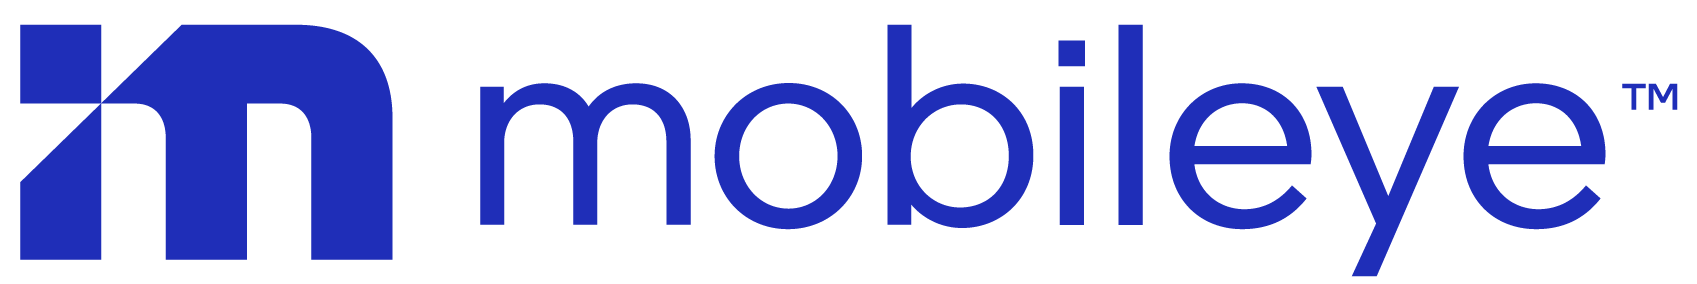 mobileye logo horizontal color rgb - Security